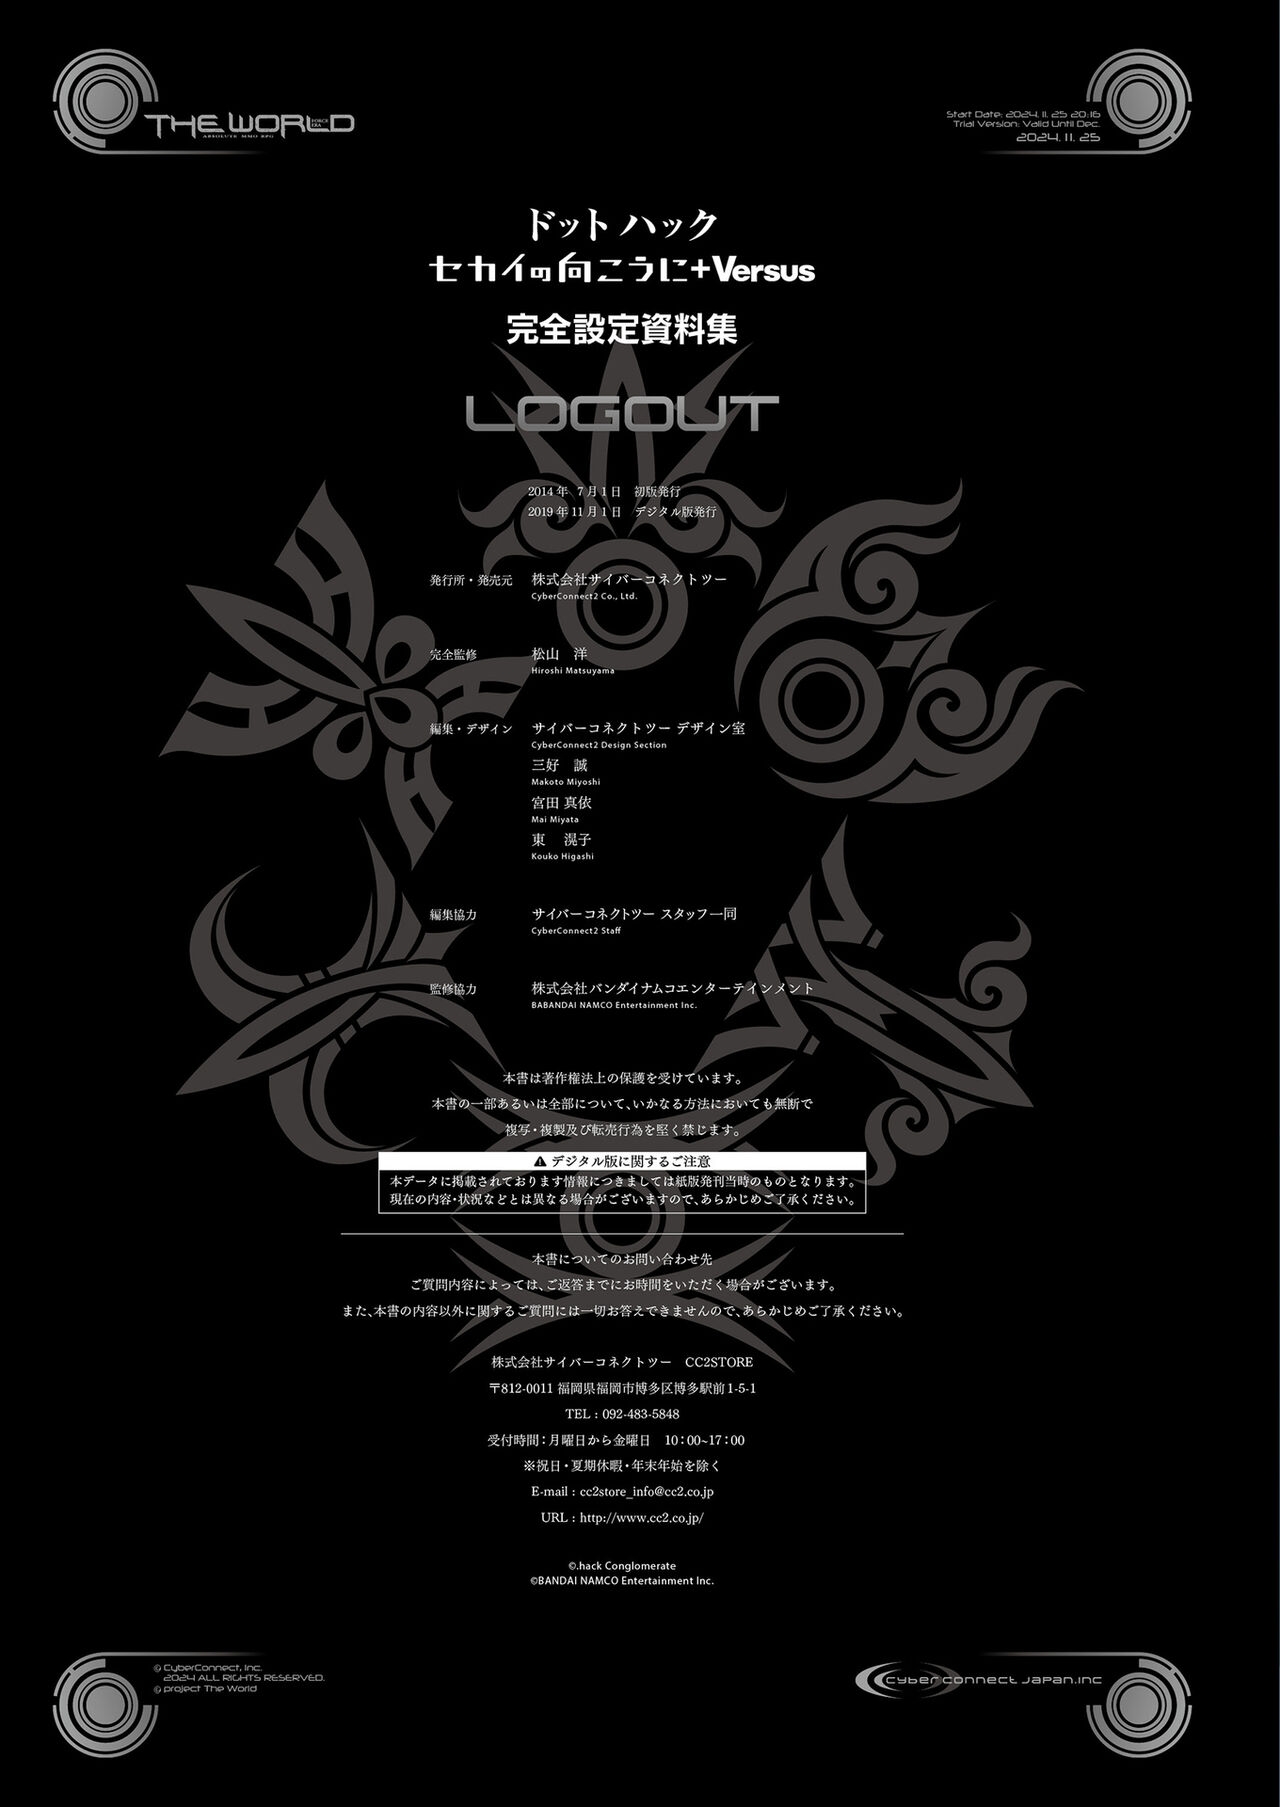 Dot Hack Sekai-no Muko ni  +Versus Complete Set  Documentation .hack //Archives _ 05 354